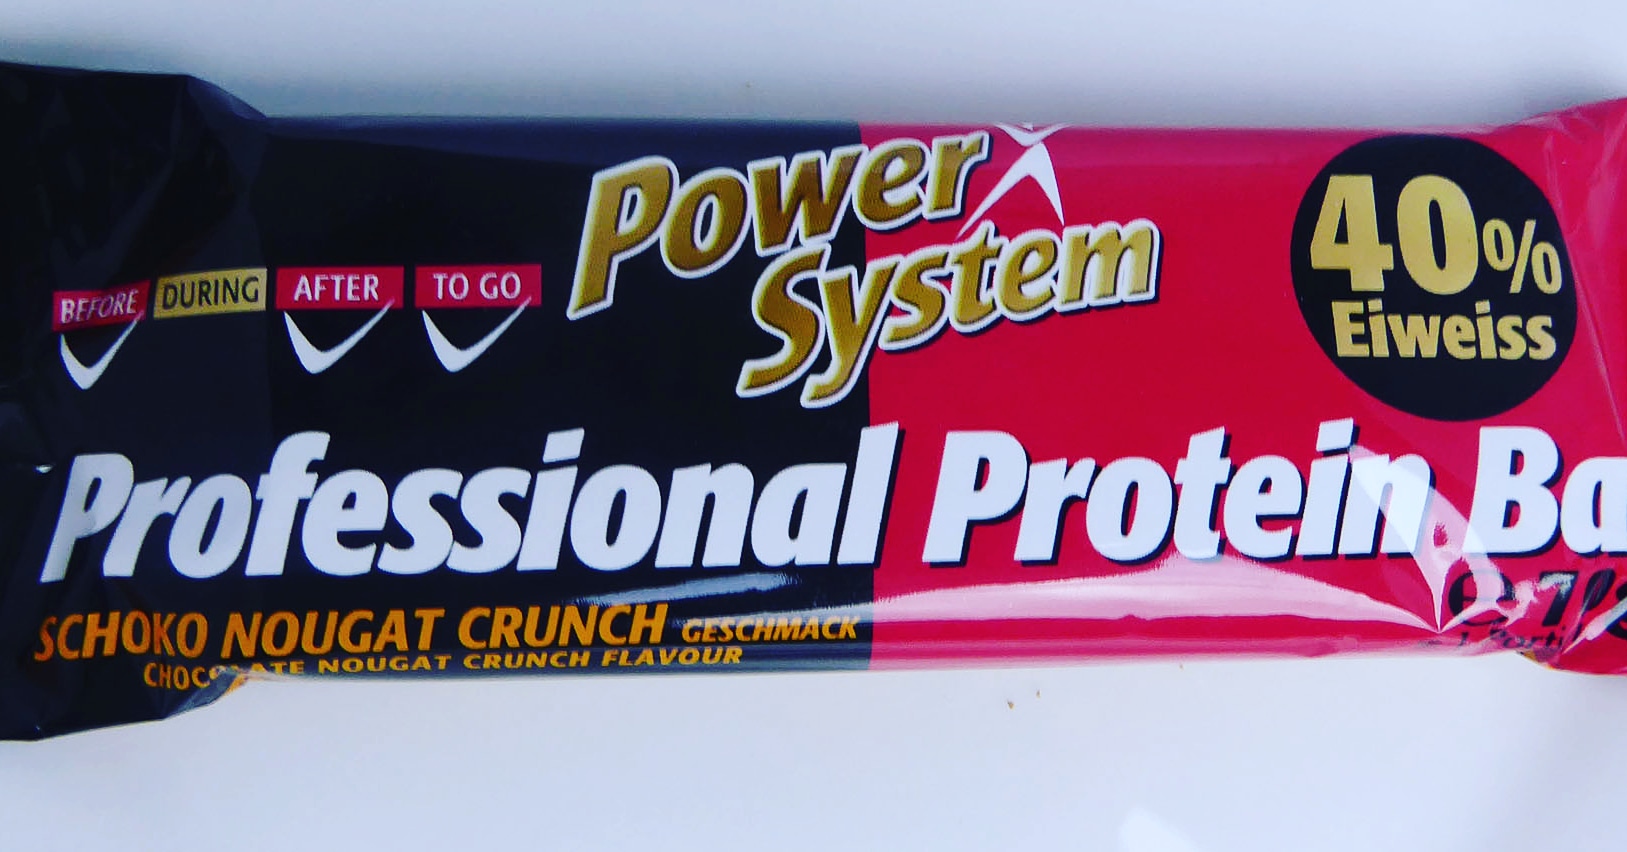 Power System Professional Protein Bar Schoko Nougat Crunch